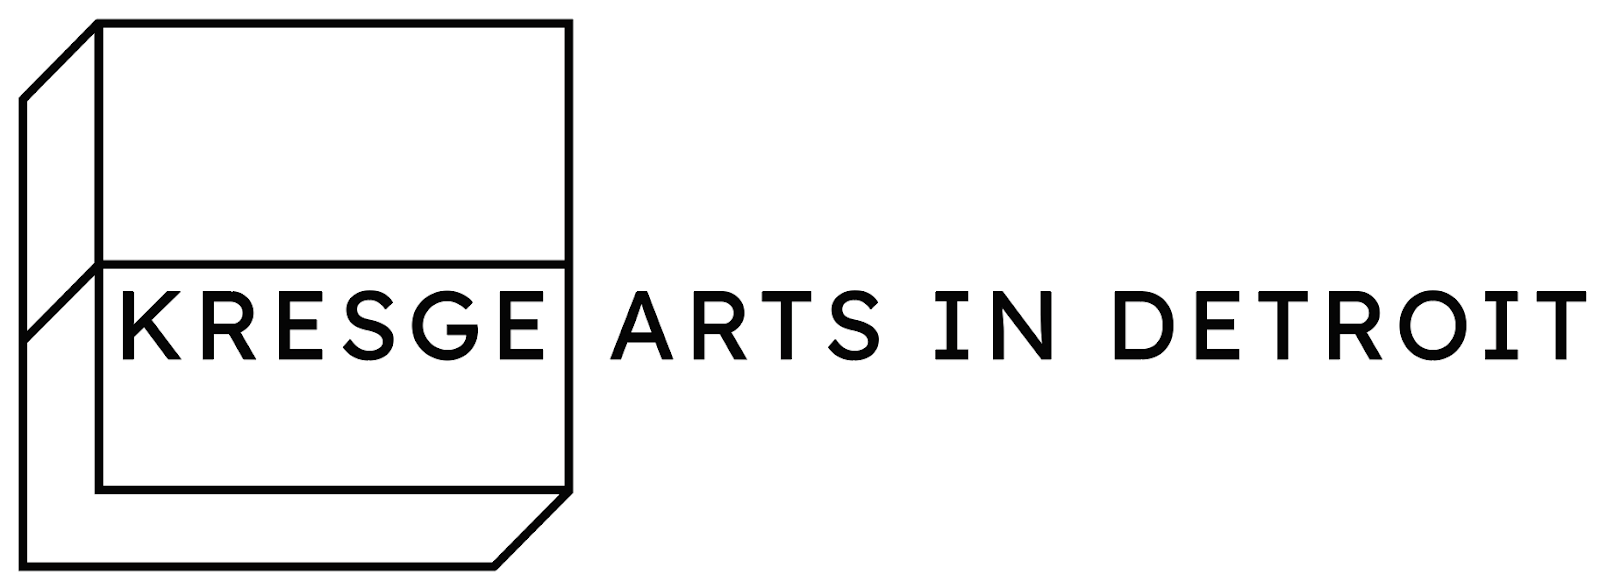 Kresge Arts in Detroit logo